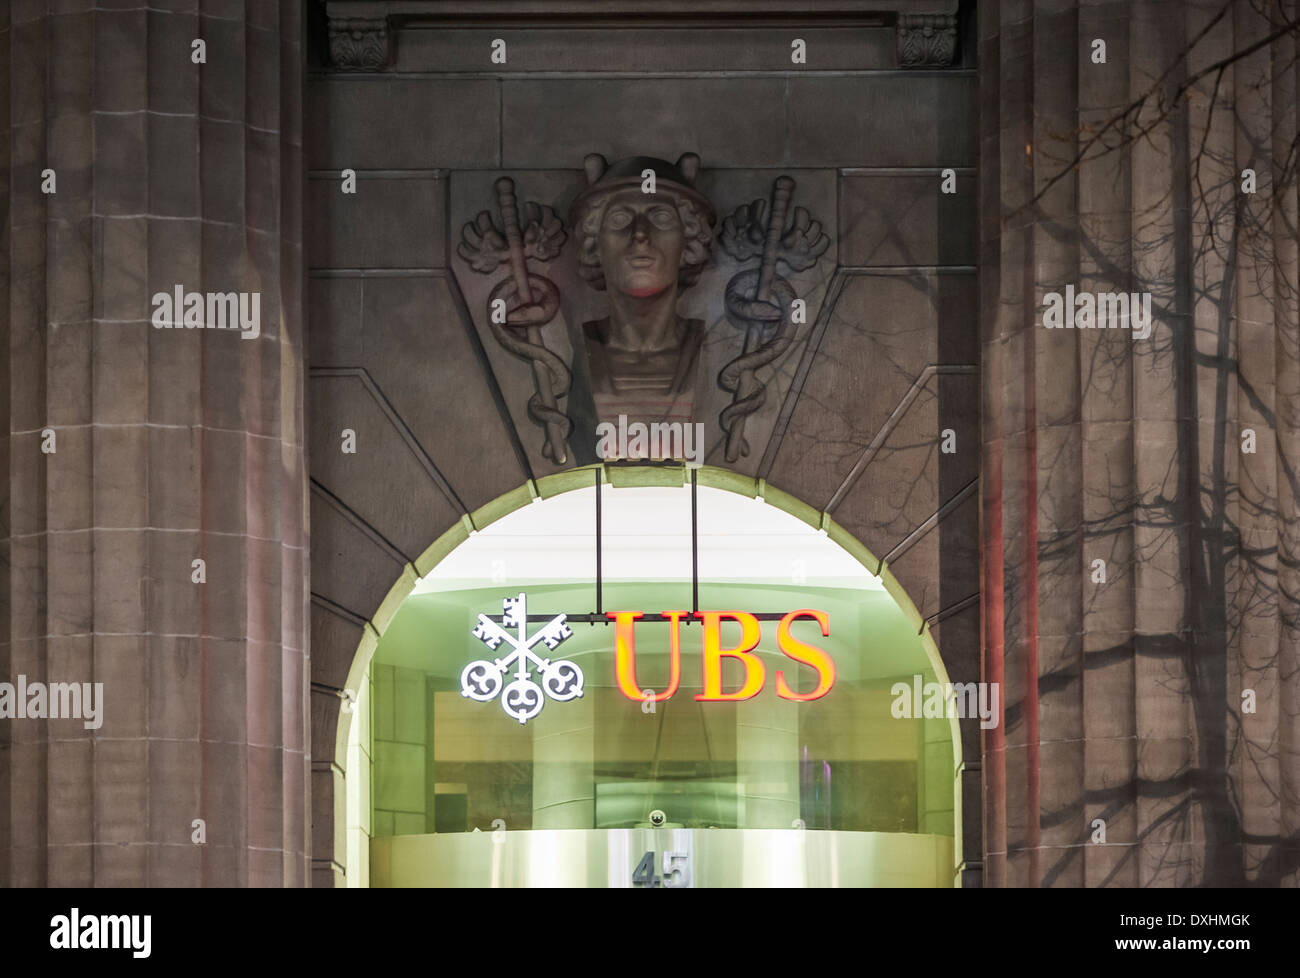 Entrance of UBS, Switzerland's largest bank in Zurich, Switzerland at night. Stock Photo